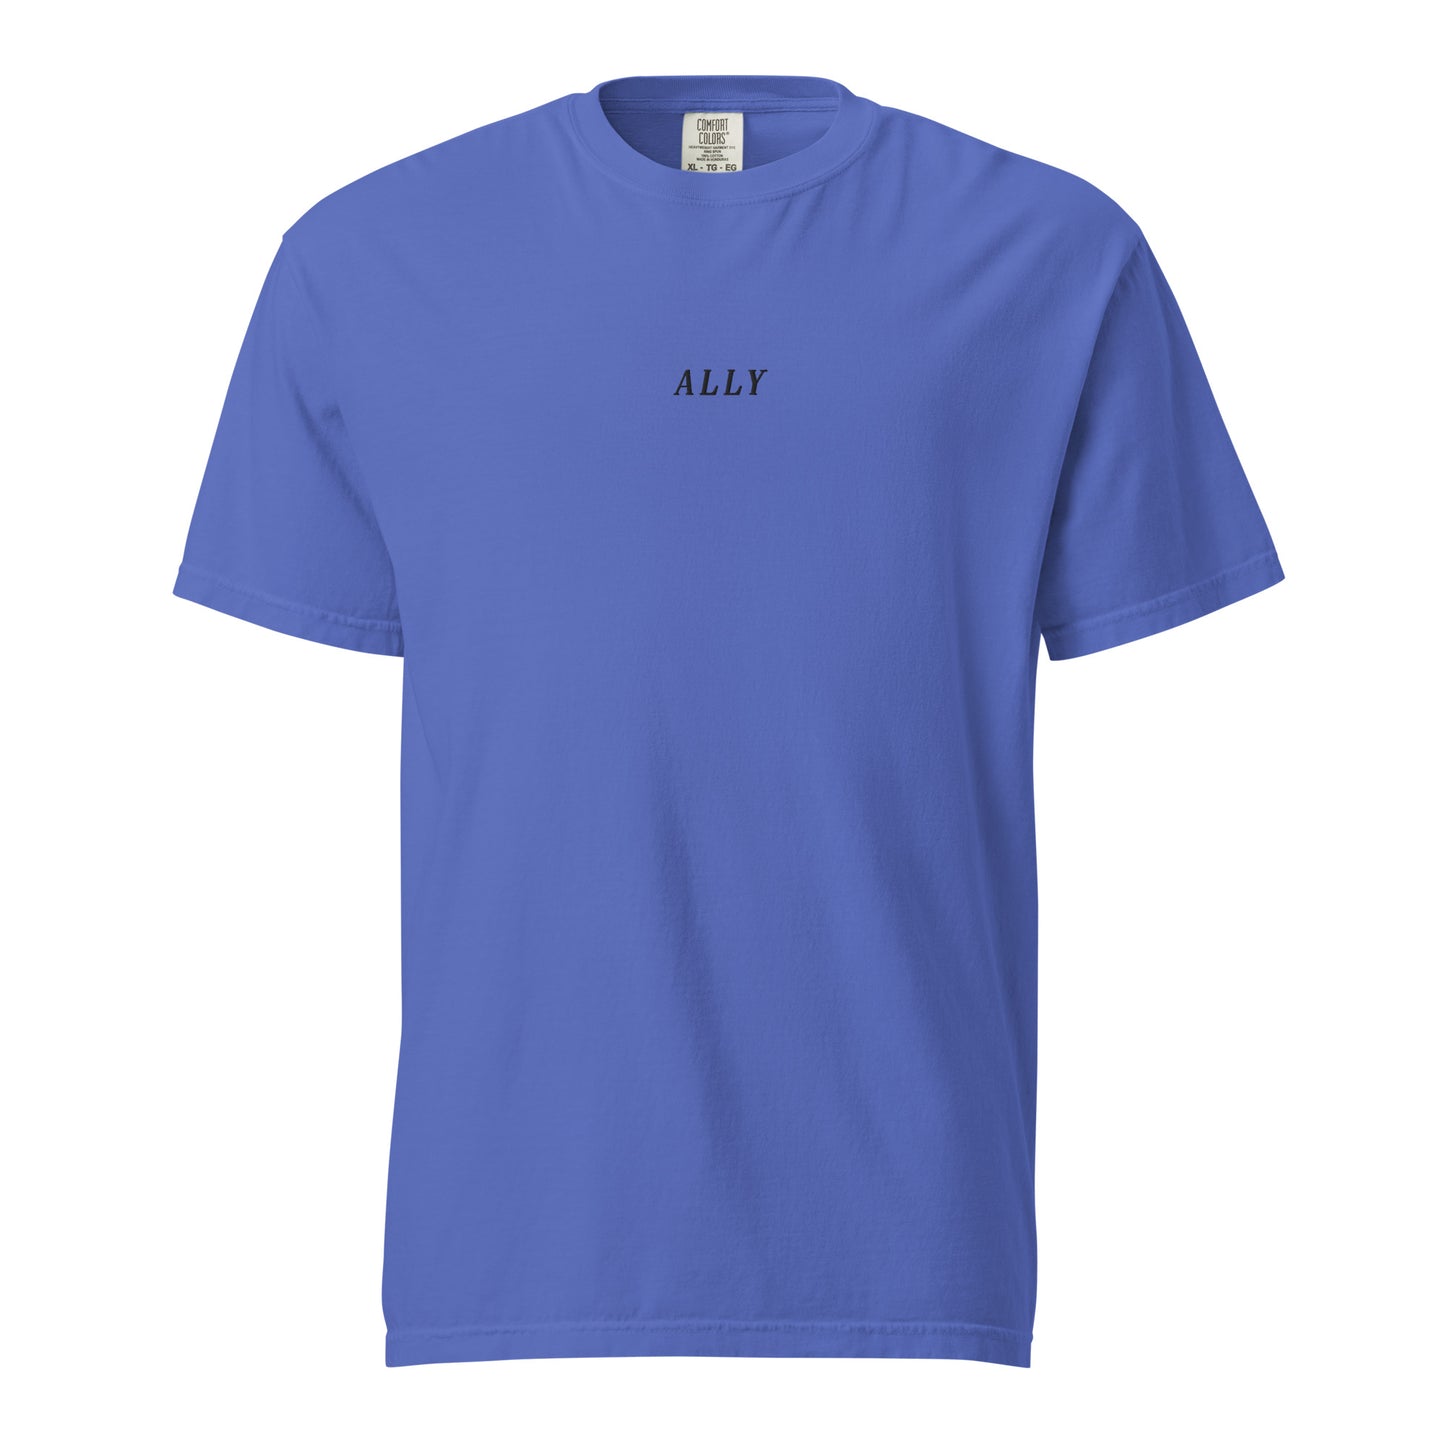 the Ally t-shirt - svart brodering